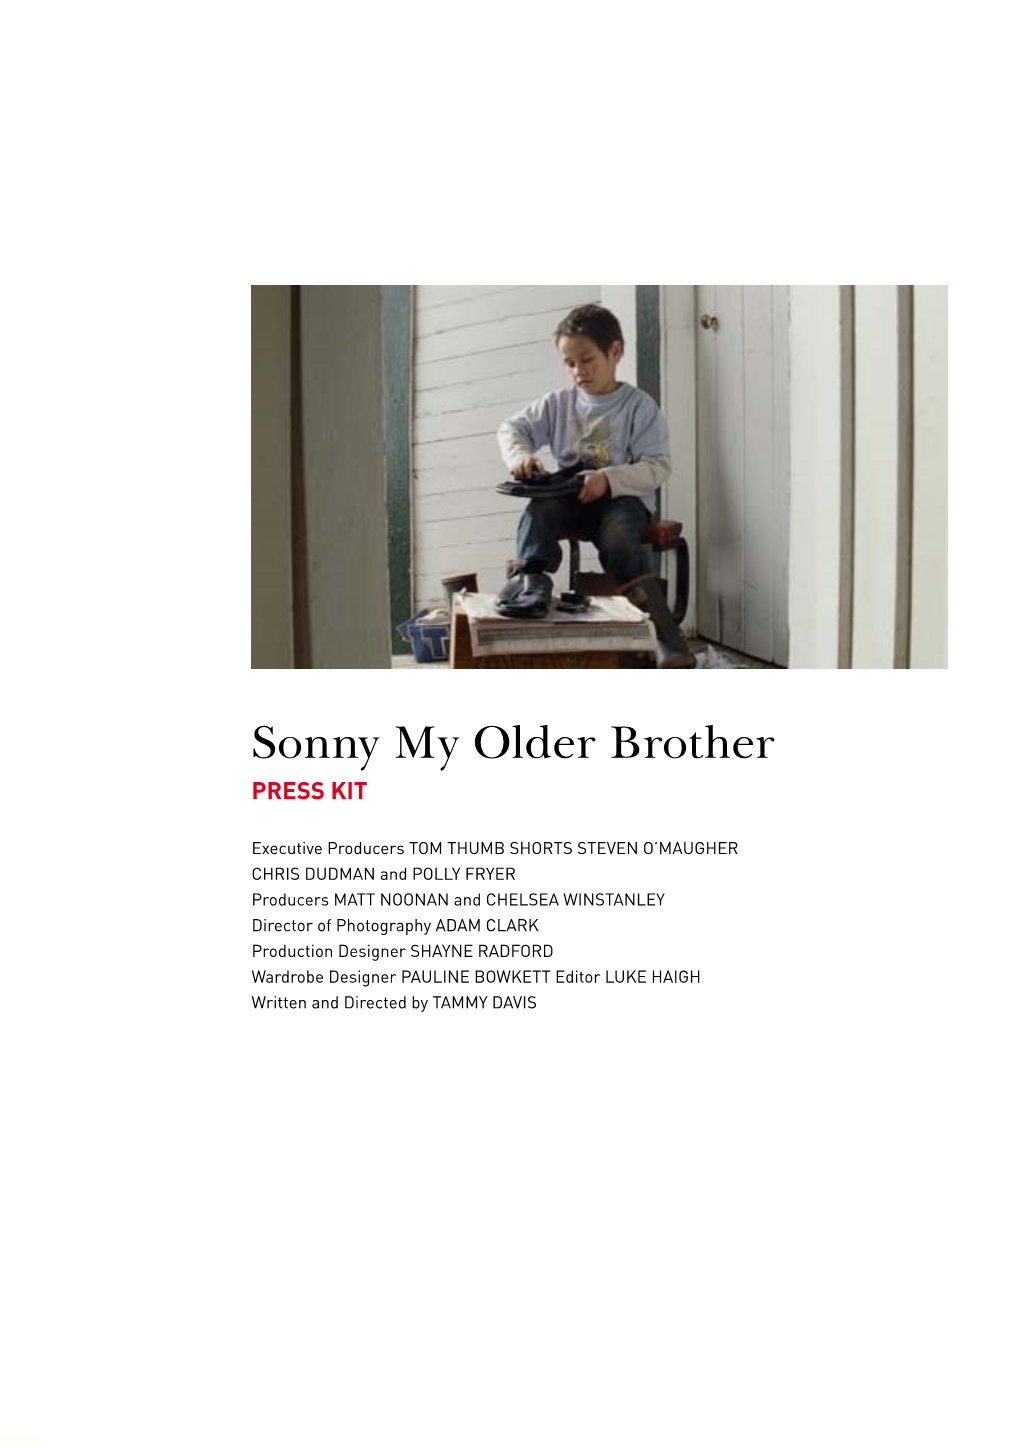 Sonny, My Older Brother Press